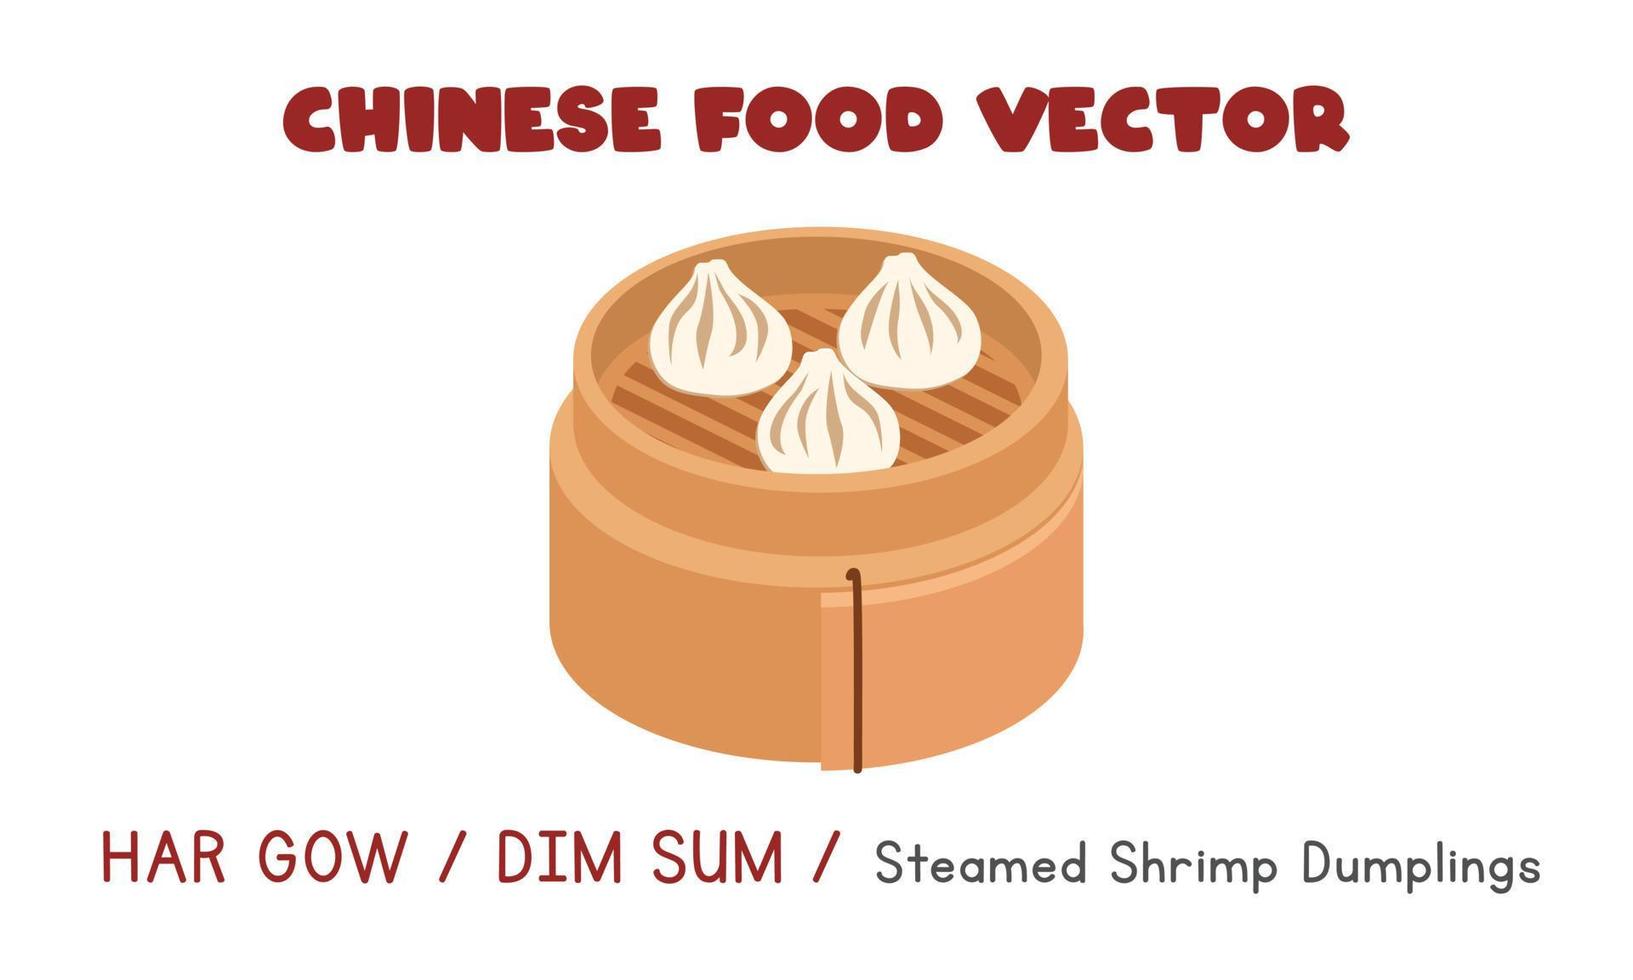 chino har gow o dim sum - albóndigas de camarón al vapor chino en una ilustración de diseño de vector plano de vapor de bambú, estilo de dibujos animados de clipart. comida asiática. cocina china. comida china